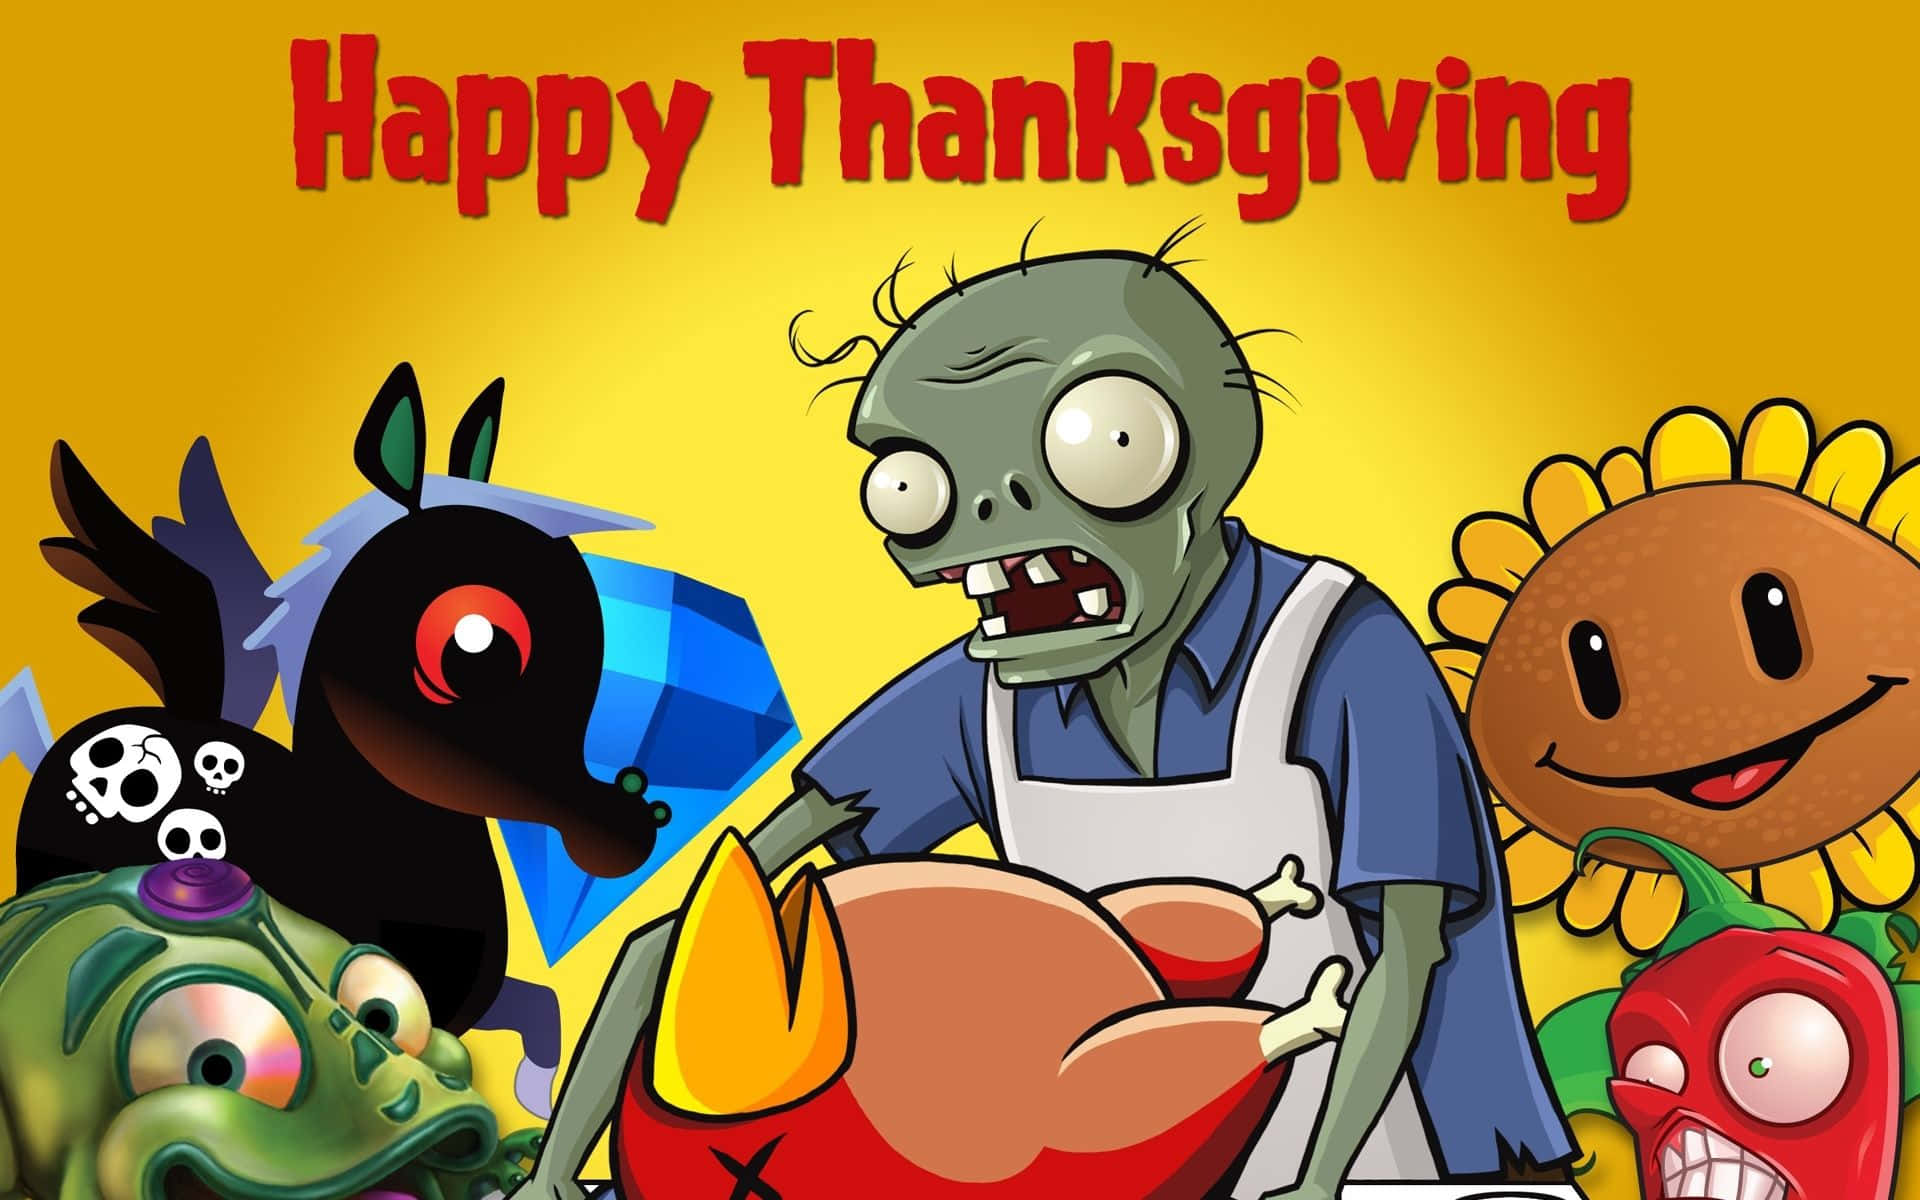 Let The Funny Thanksgiving Festivities Begin!